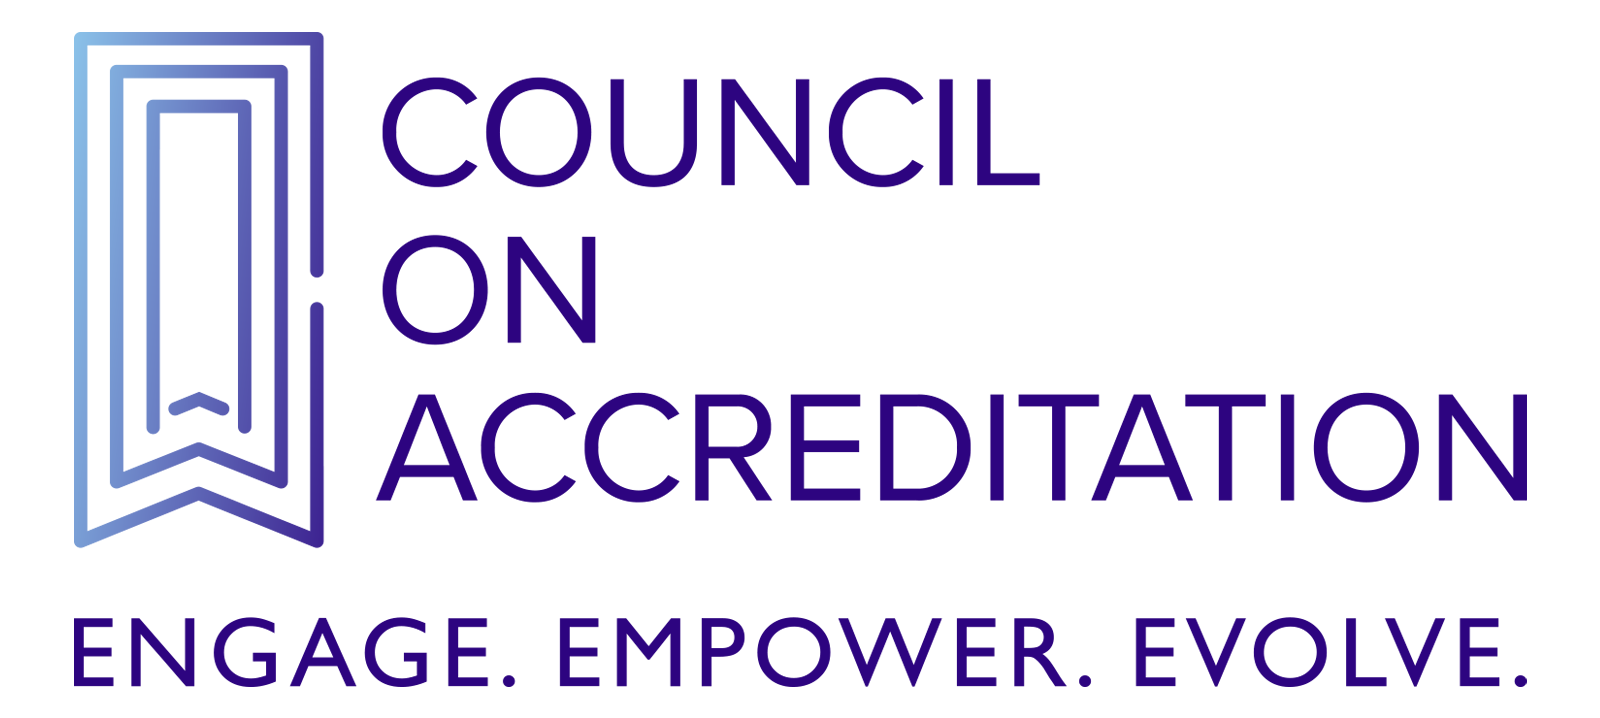 Council on Accreditation (COA)